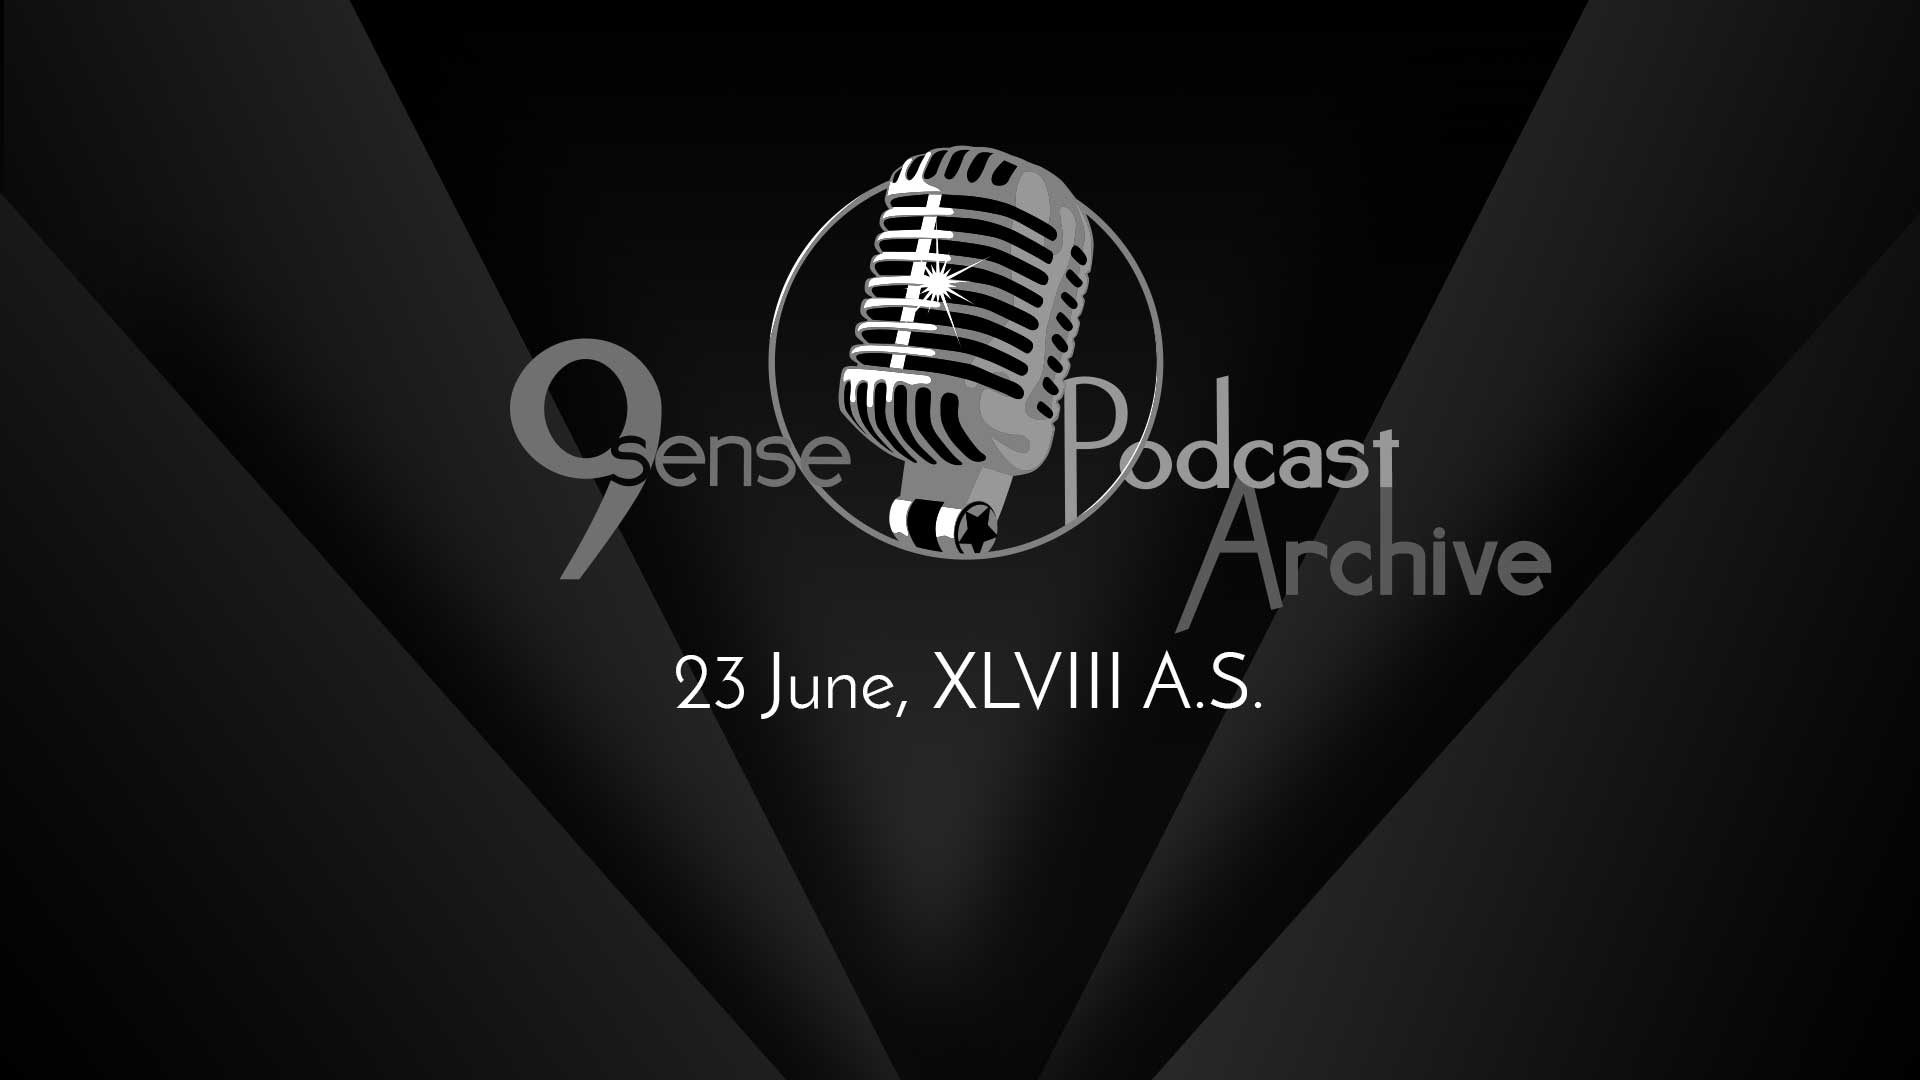 9sense Podcast Archive - 23 June, XLVIII A.S.